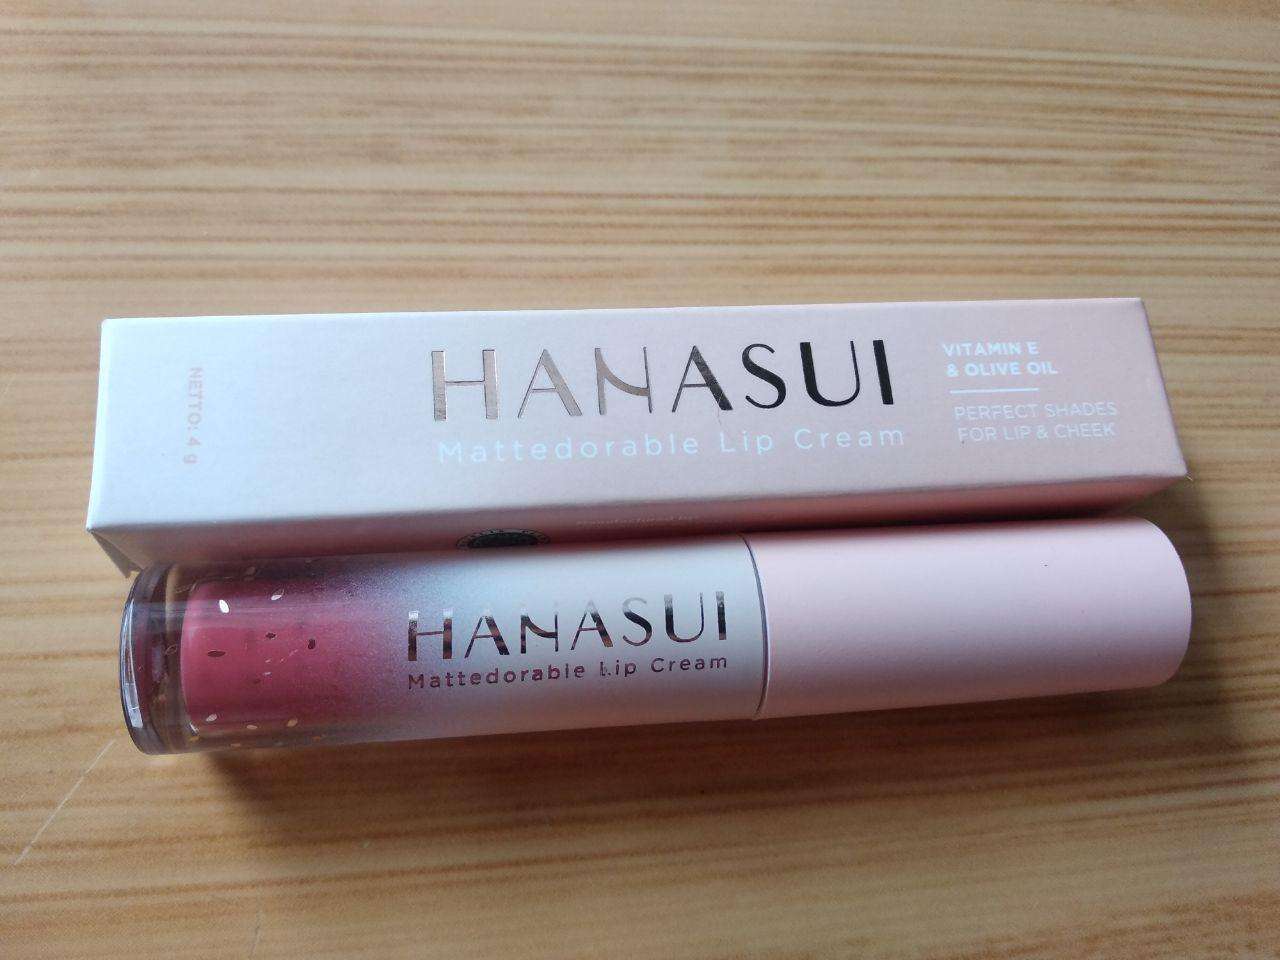 Packaging Hanasui Mattedorable Lip Cream